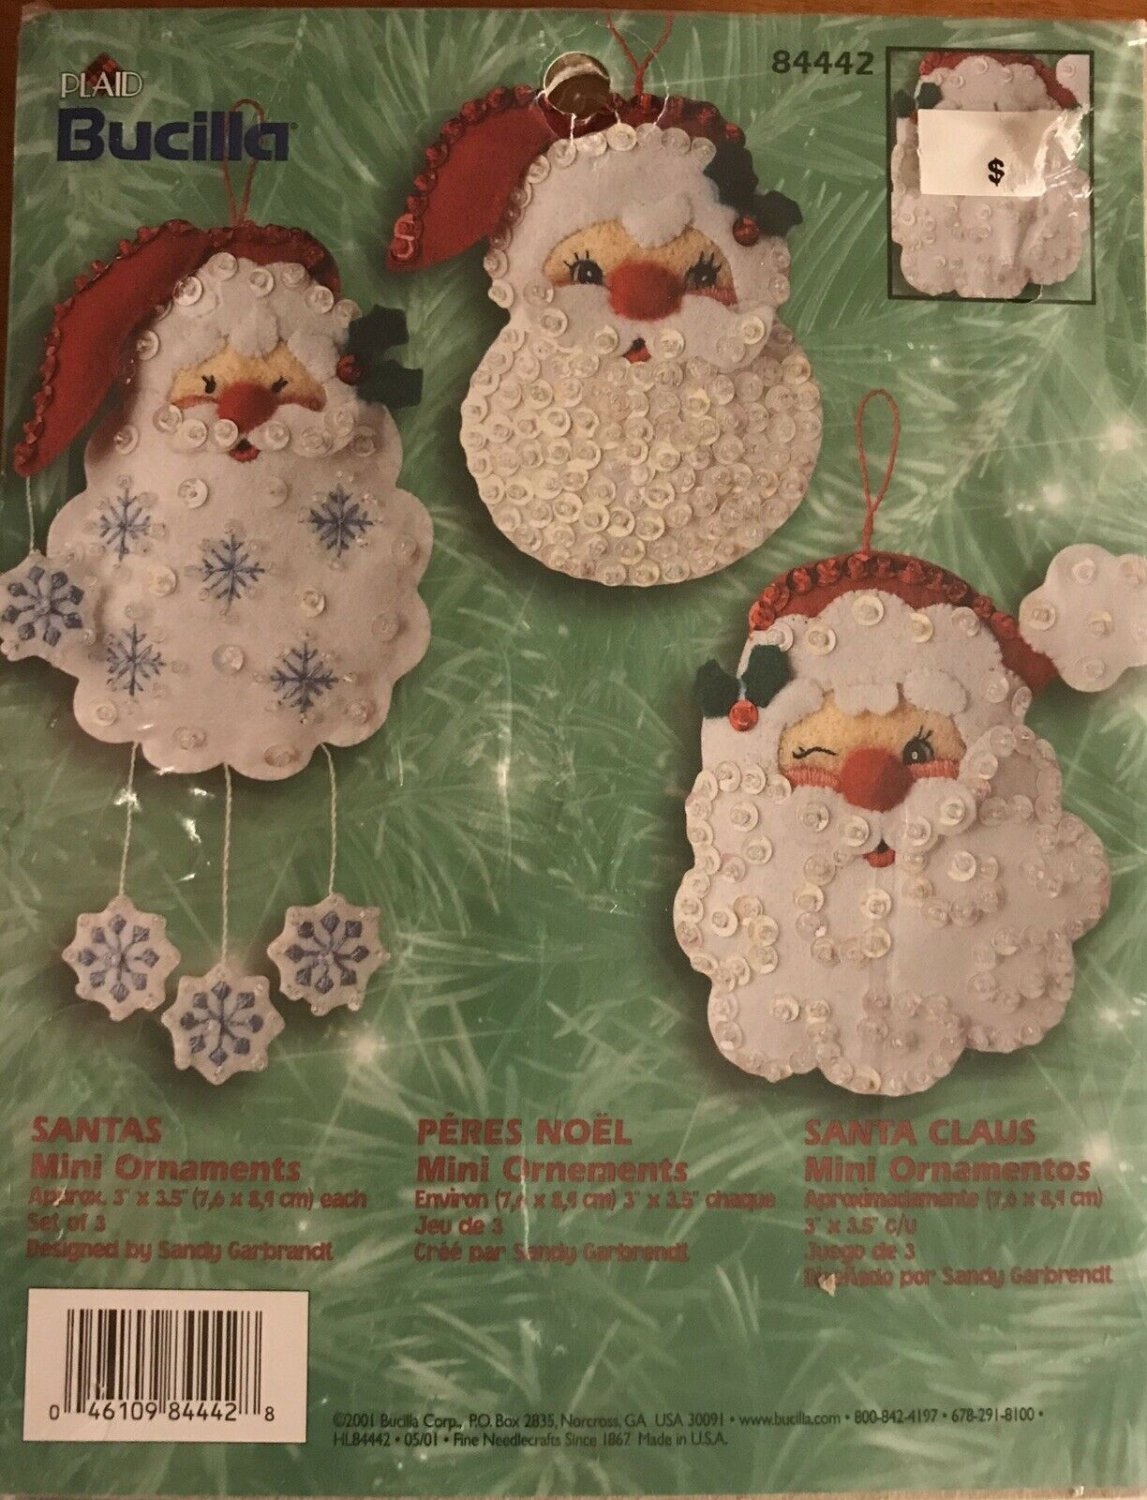 6 Packs Bucilla Santas Mini Ornaments Kit #84442 Felt Sequin New Sealed 2001